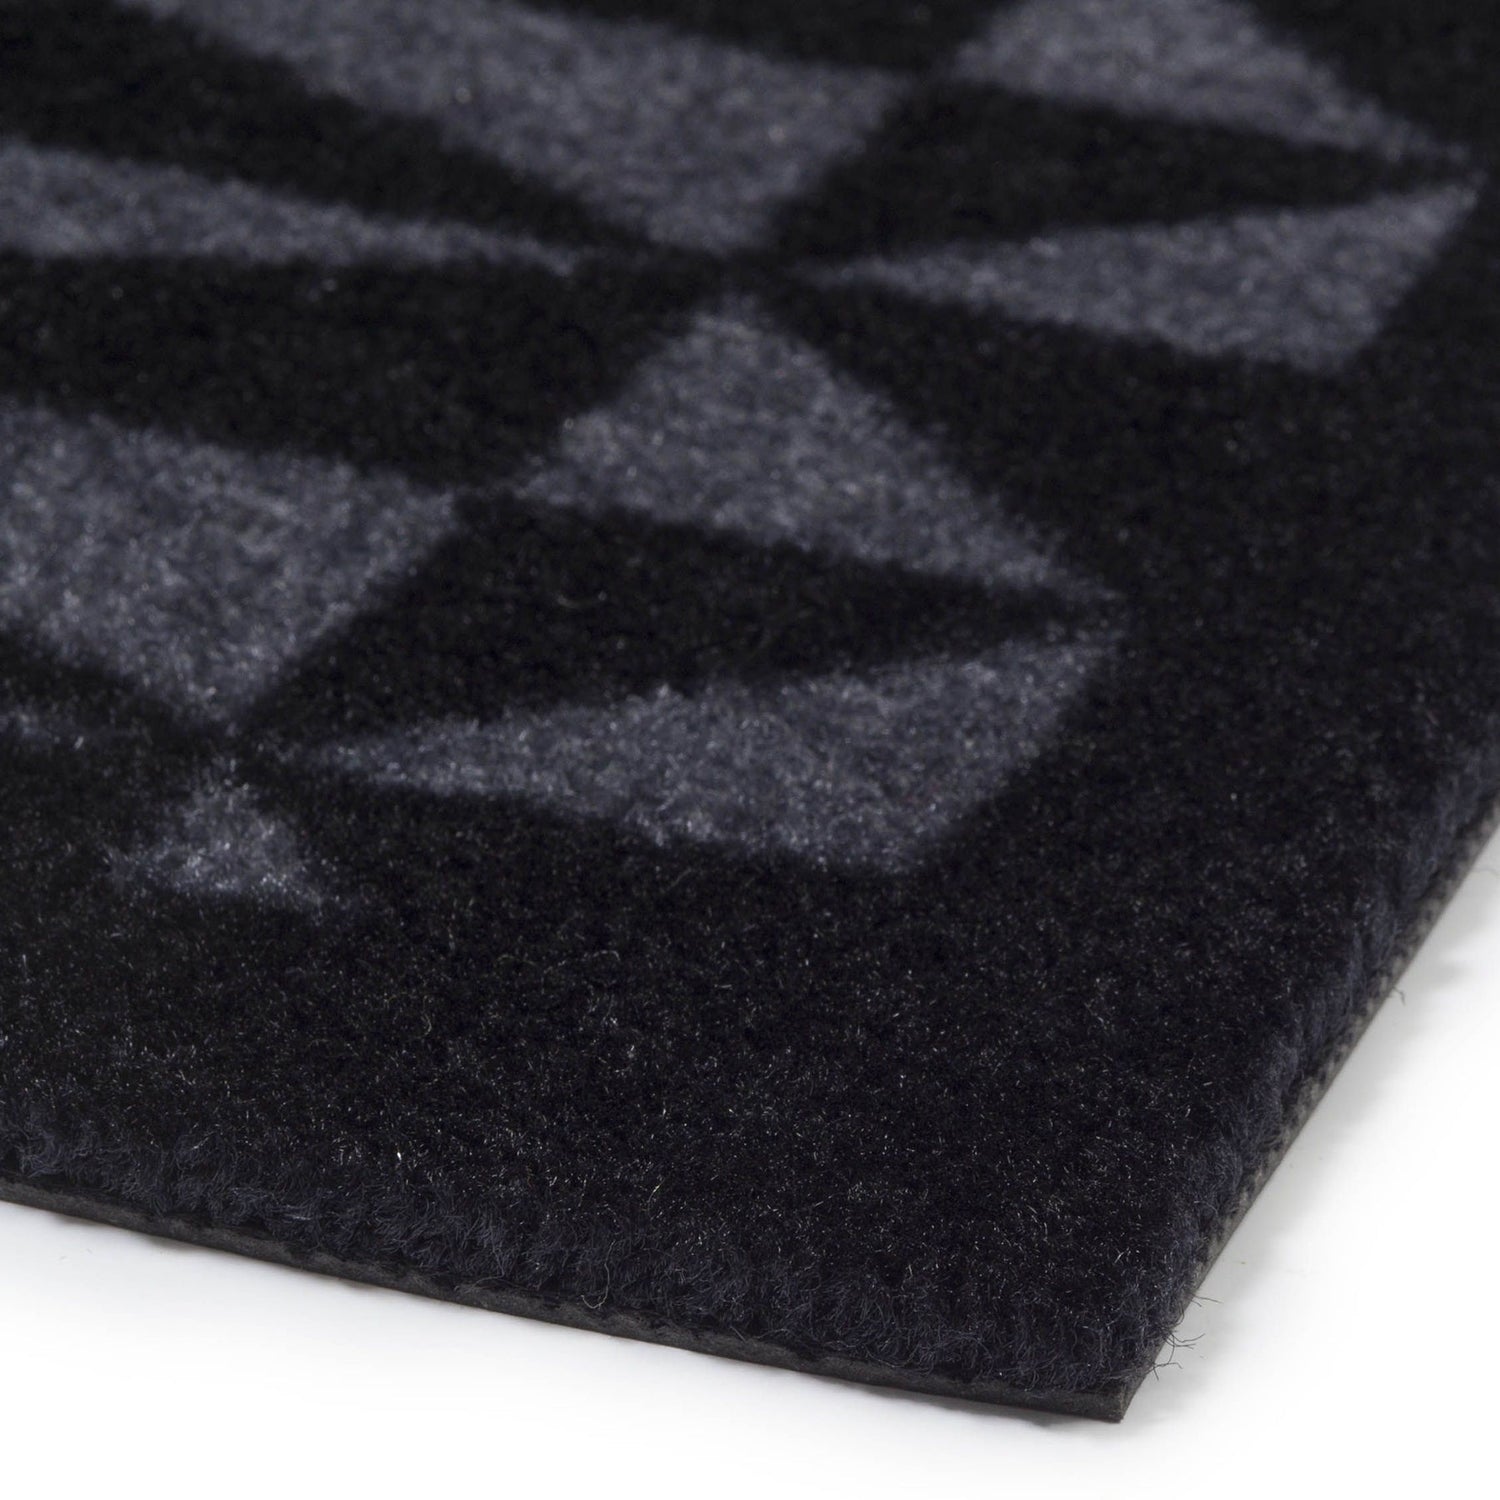 Floor mat 67 x 150 cm - Graphic/Black Gray